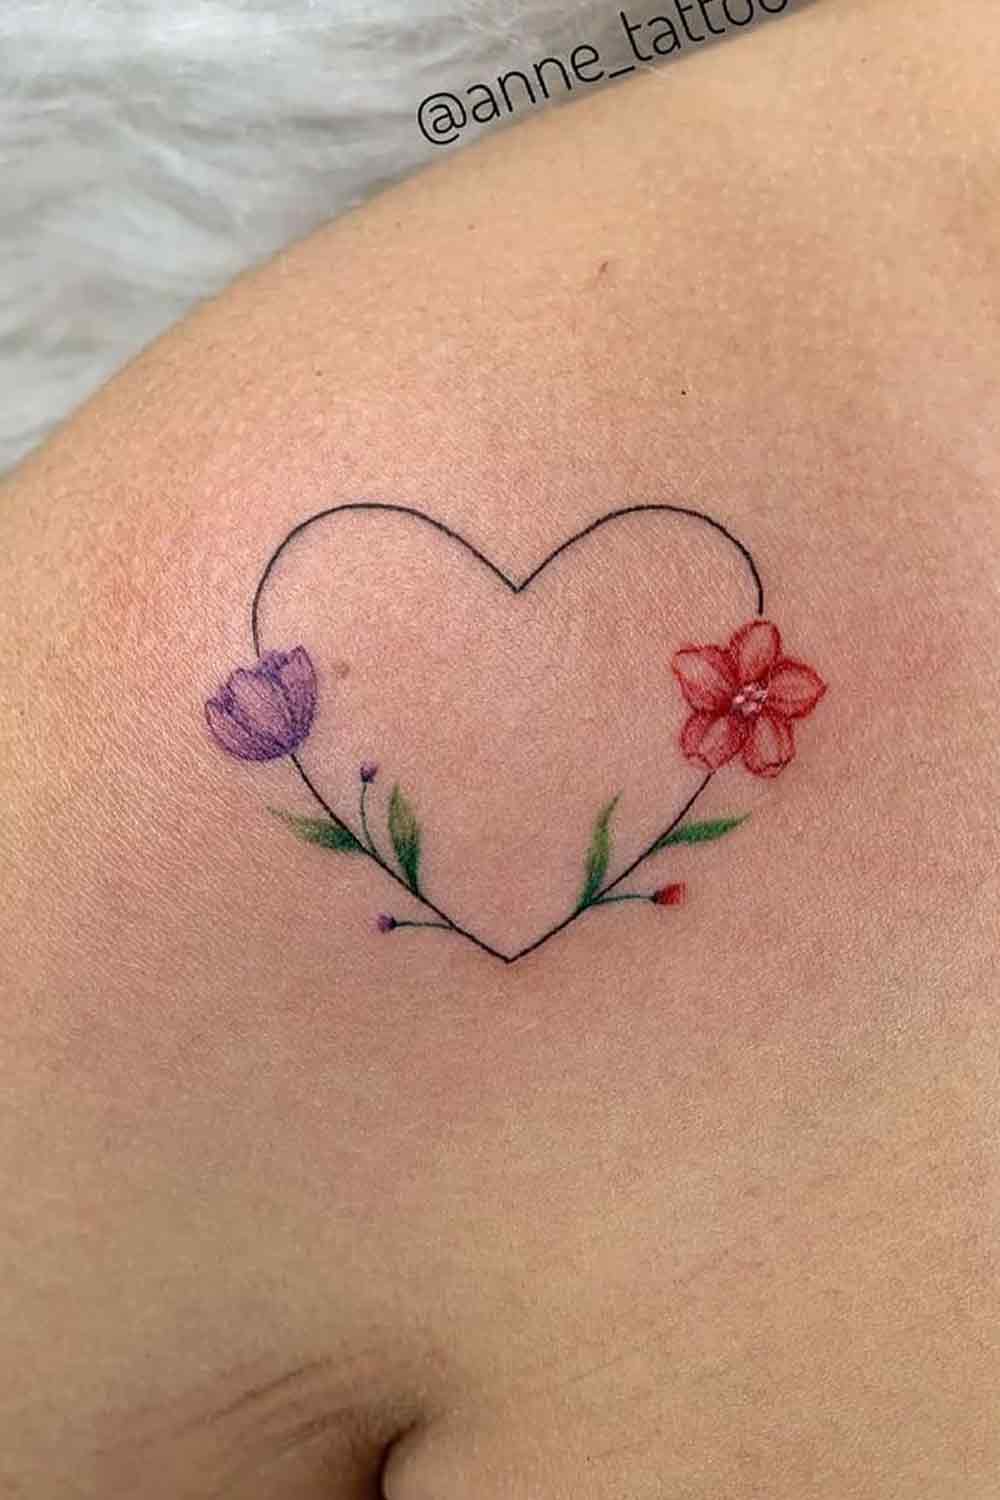 tatuagens-femininas-no-ombro-pequenas-11 